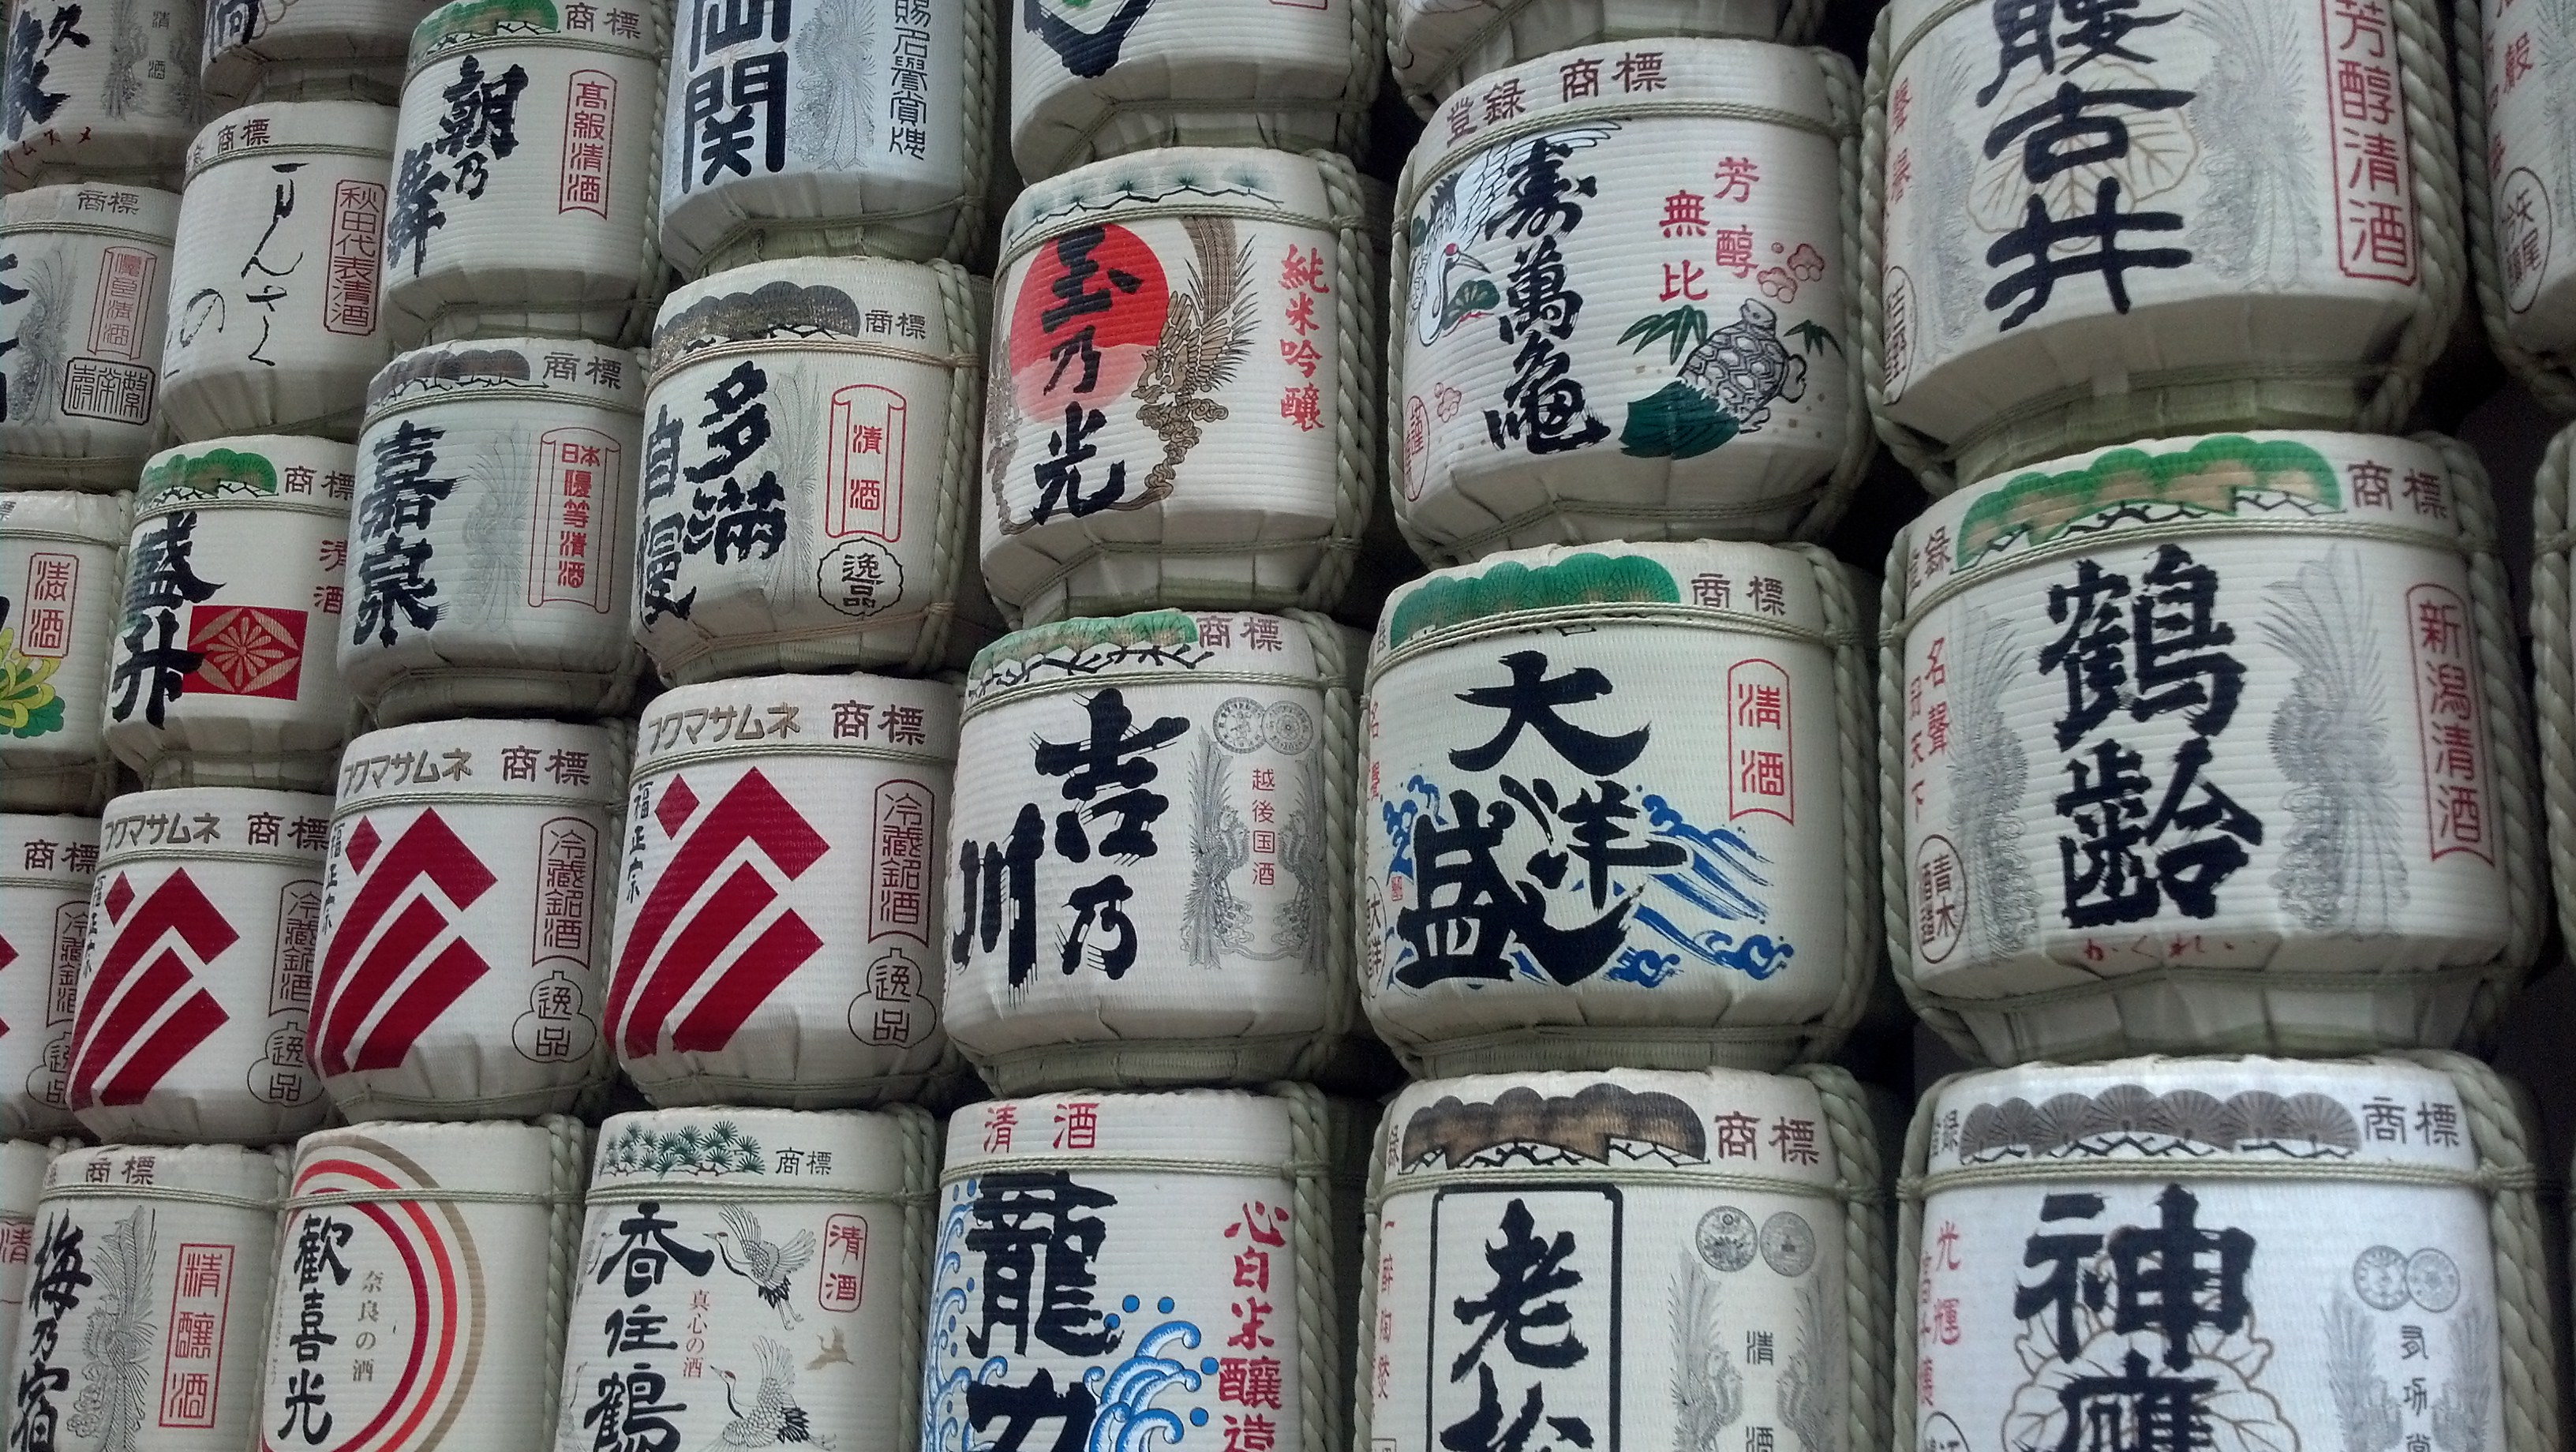 Barrels of sake, known as Nihonshu, donated to the Meiji Shrine.